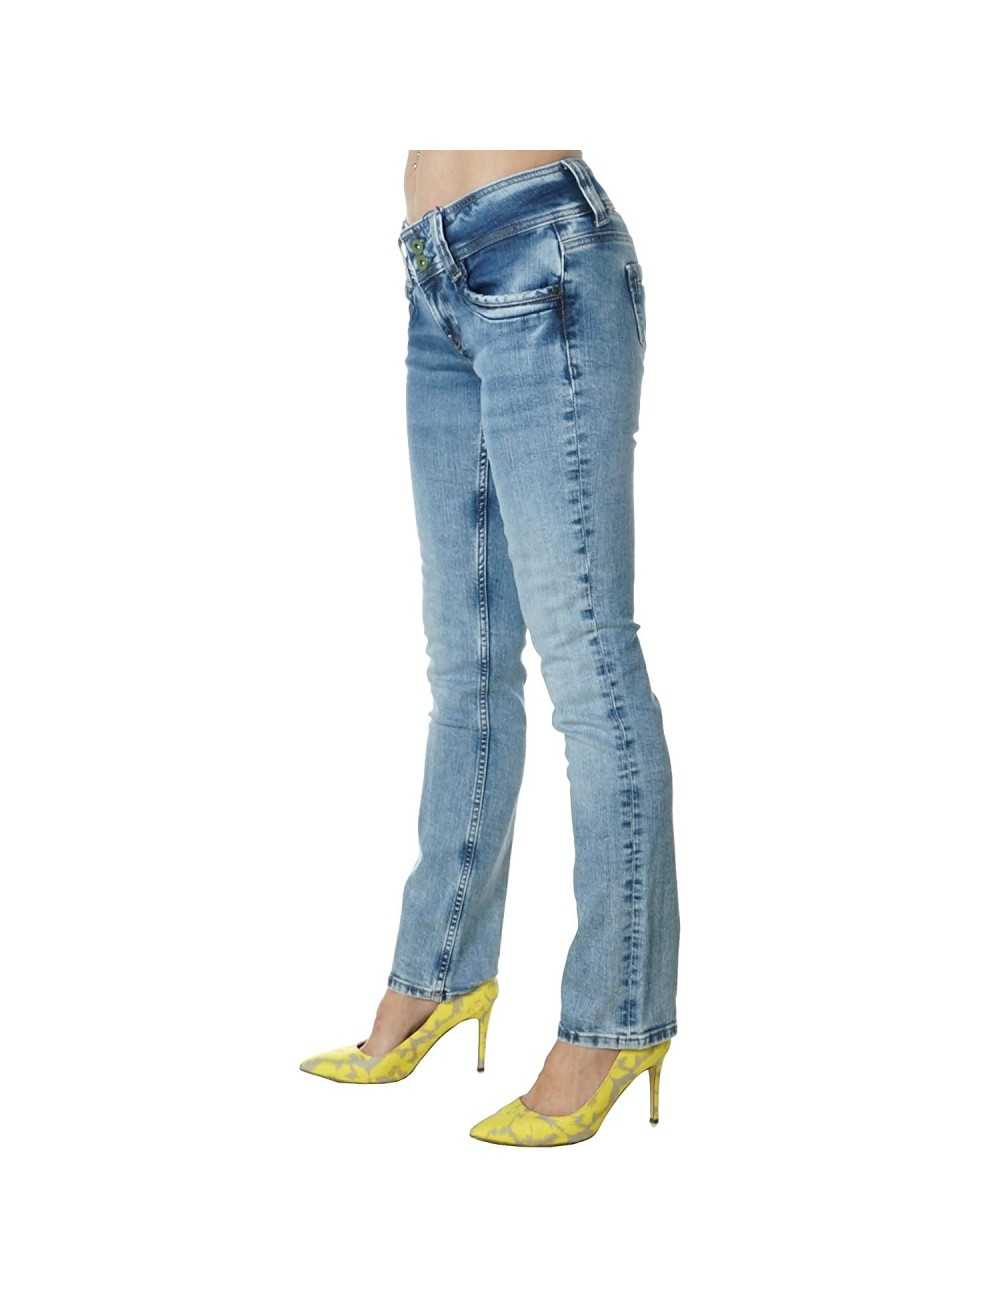 Pepe Jeans donna Straight Waist Mid Gen Denim - Jeans & Pantaloni Donna